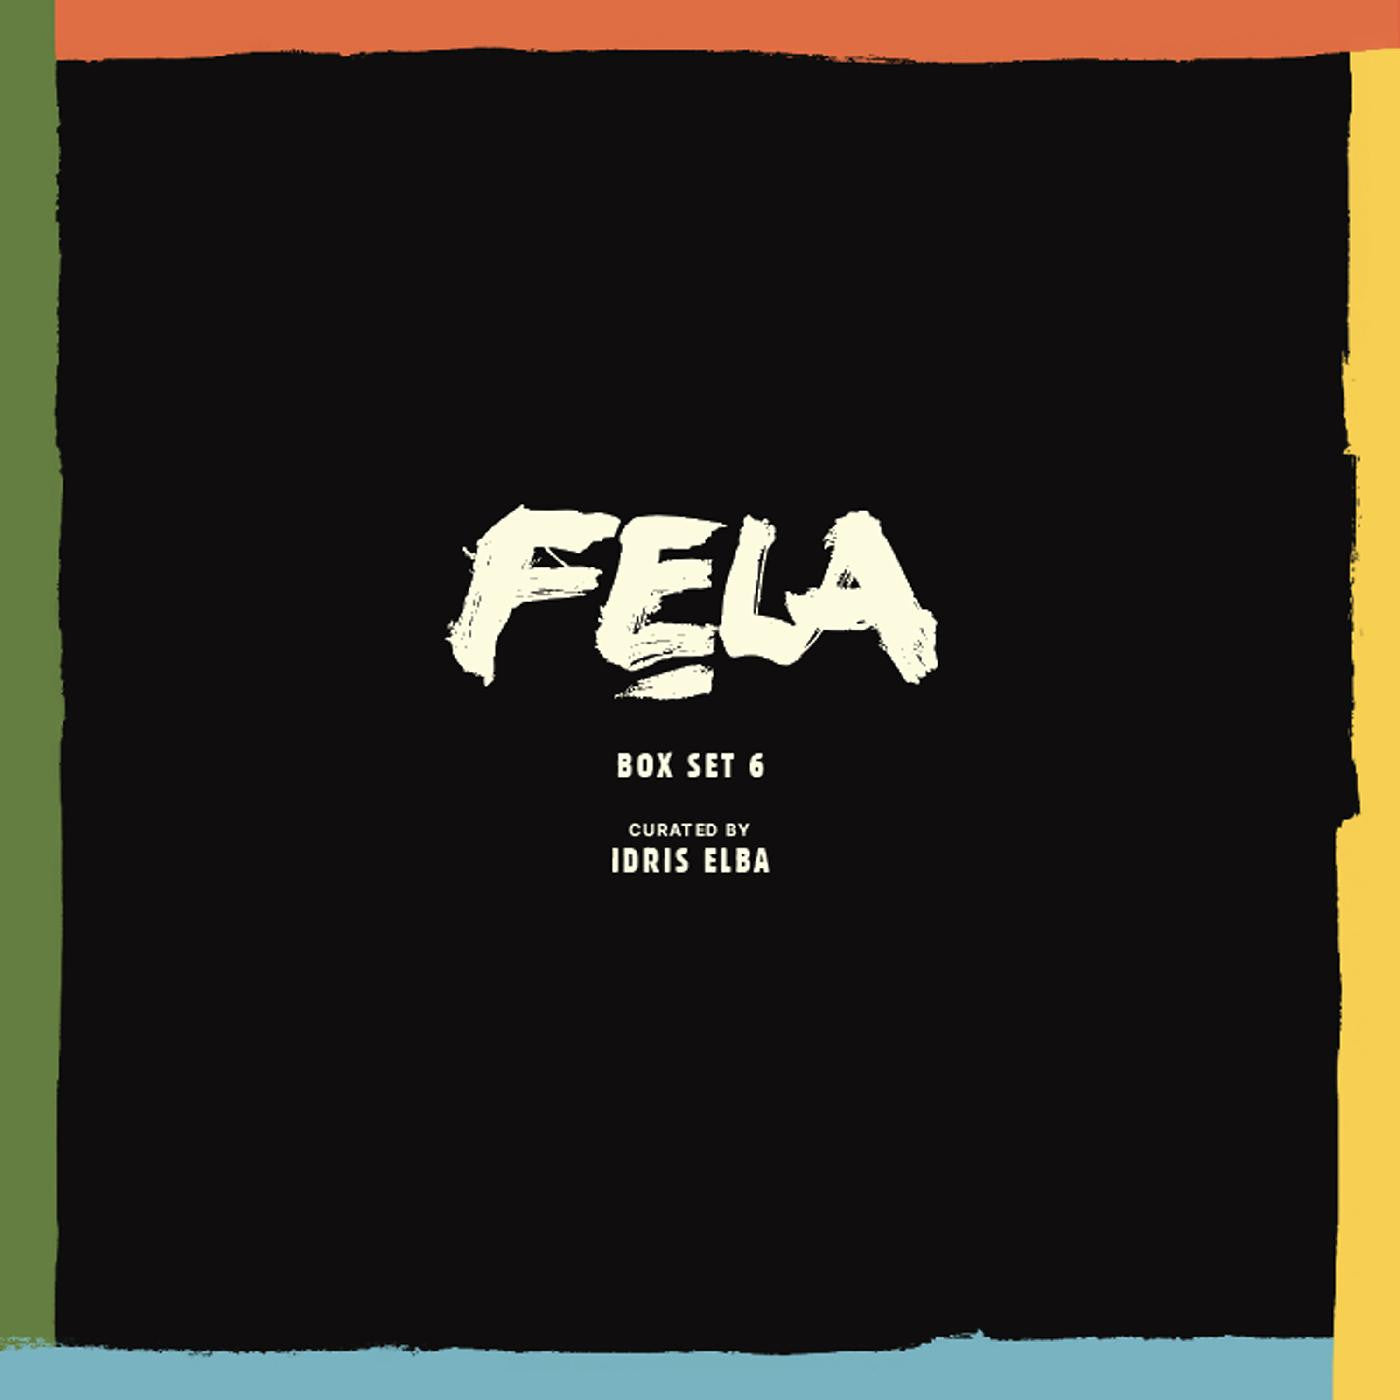 PREORDER: Kuti, Fela – BOX SET #6 CURATED BY IDRIS ELBA (DELUXE EDITION) [7xLPs] – New LP